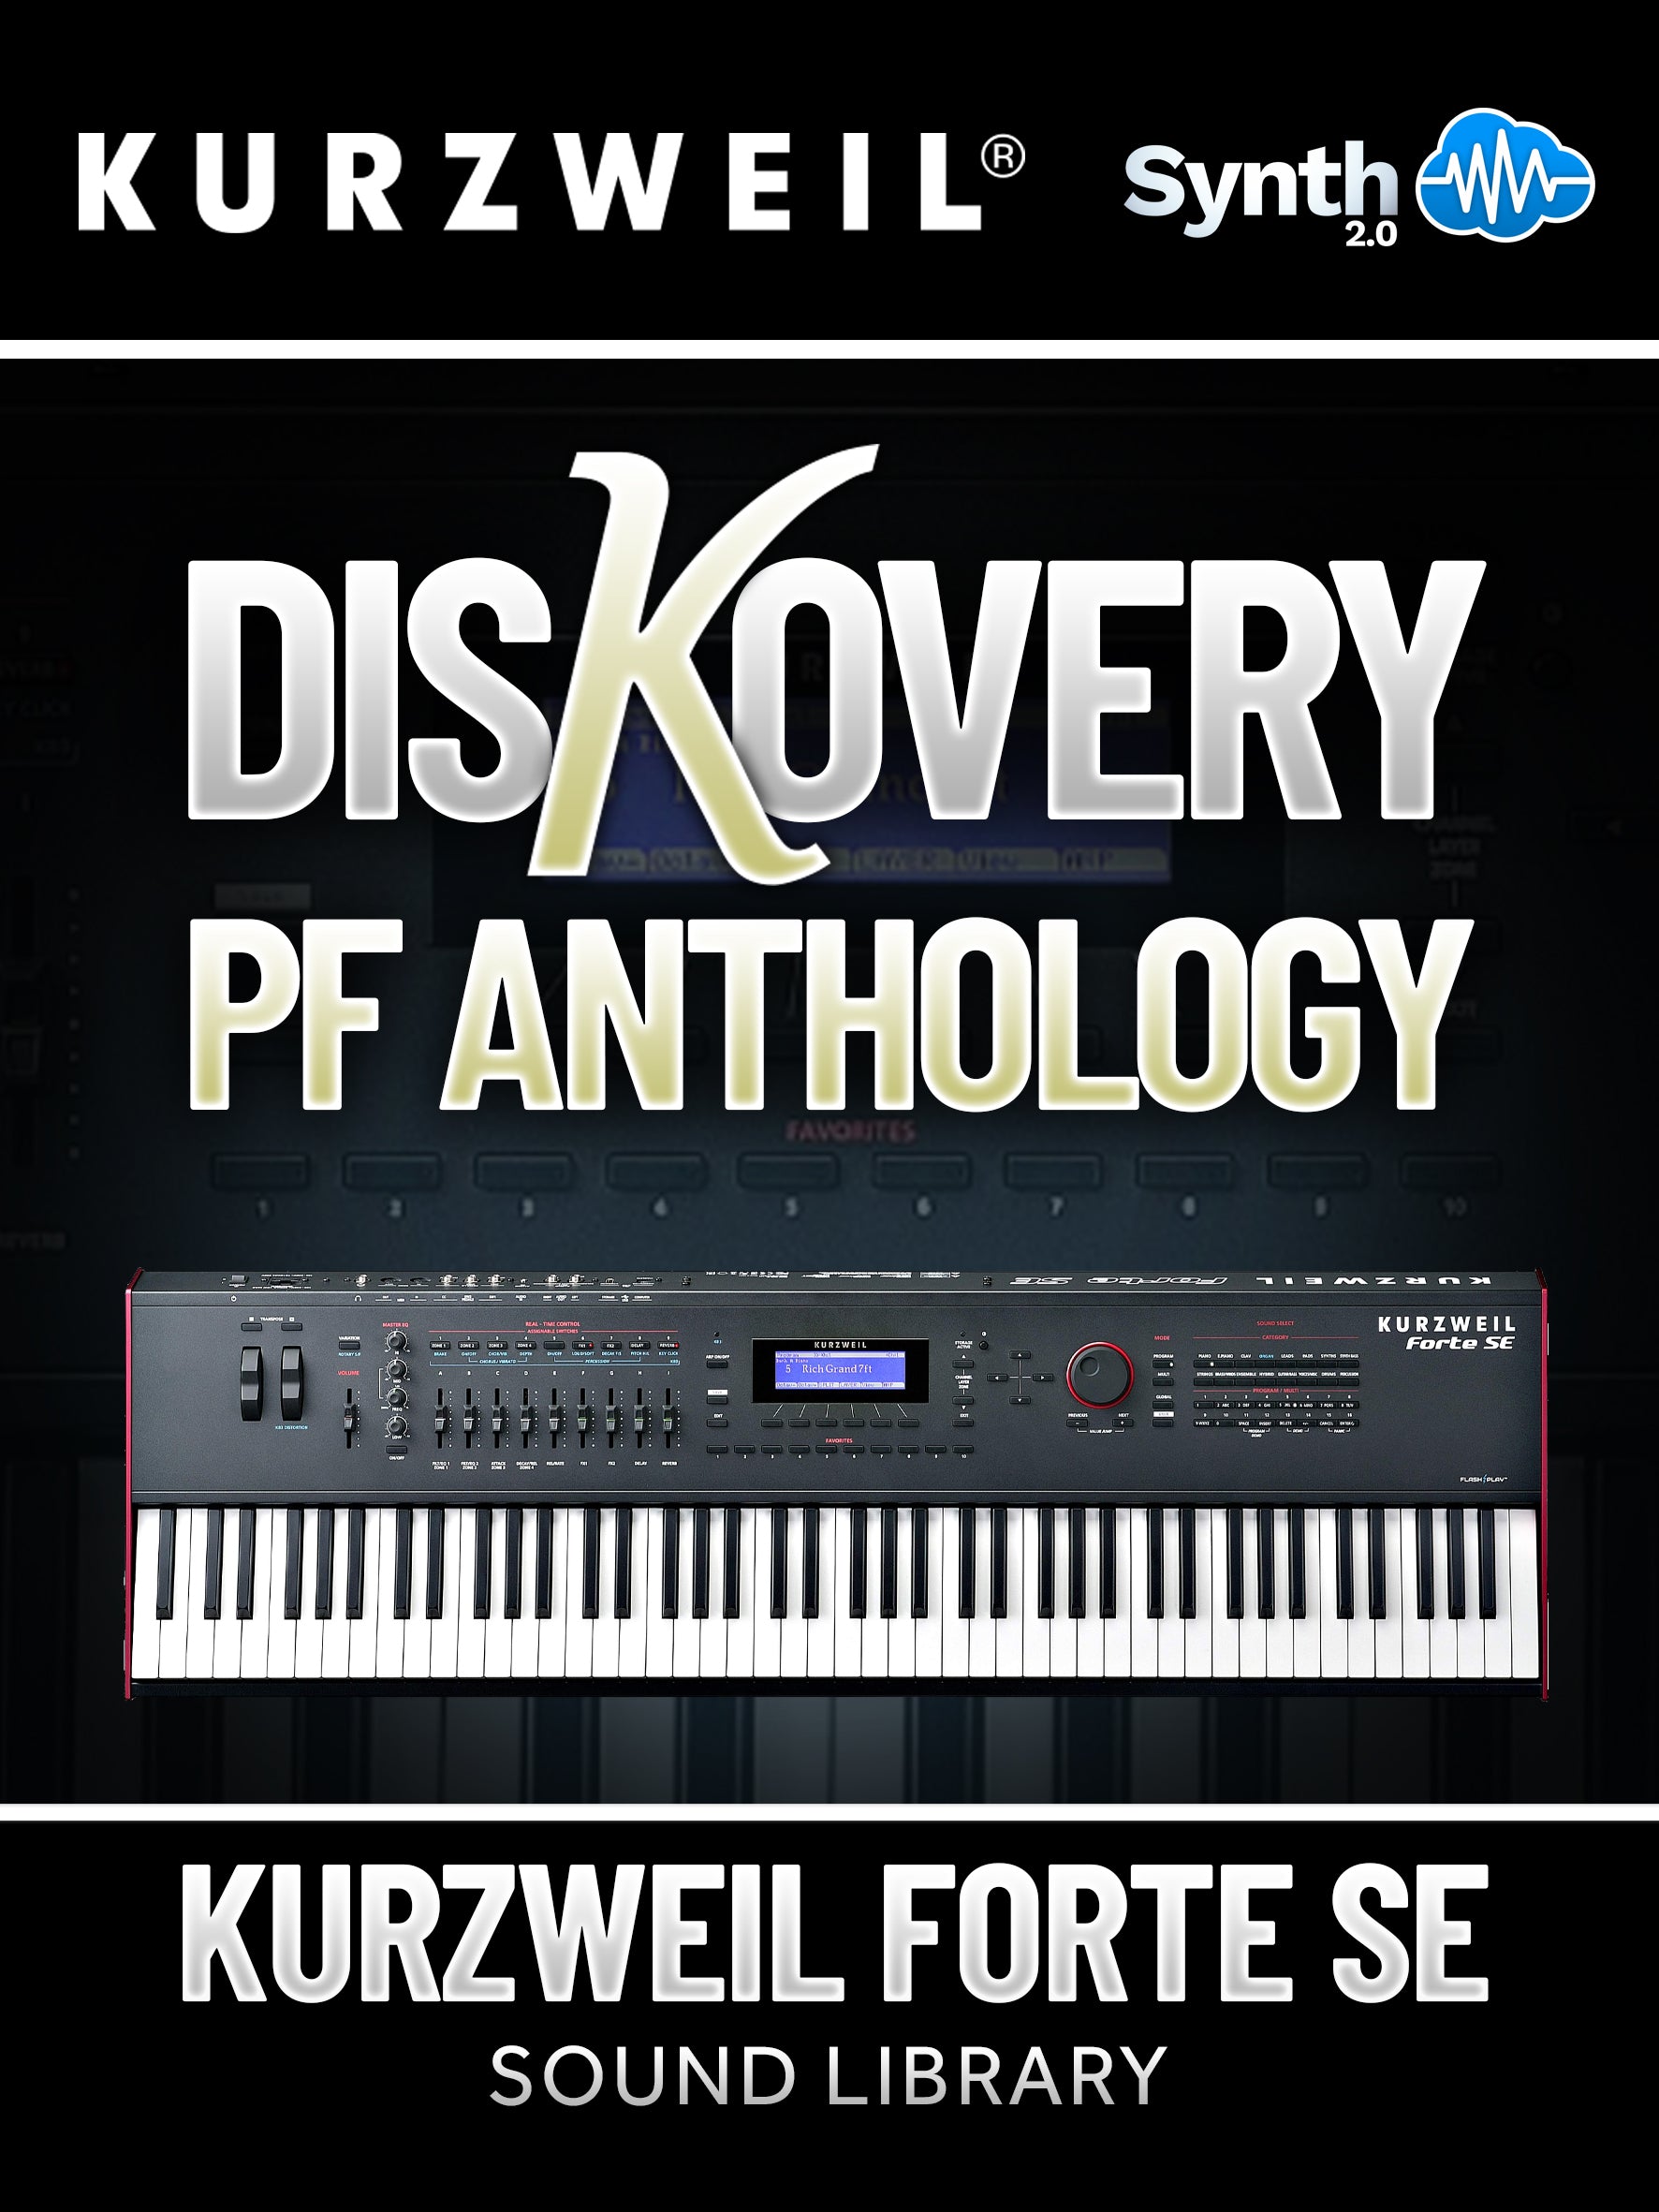 SSX128 - DisKovery PF Anthology - Kurzweil Forte SE ( over 74 presets )